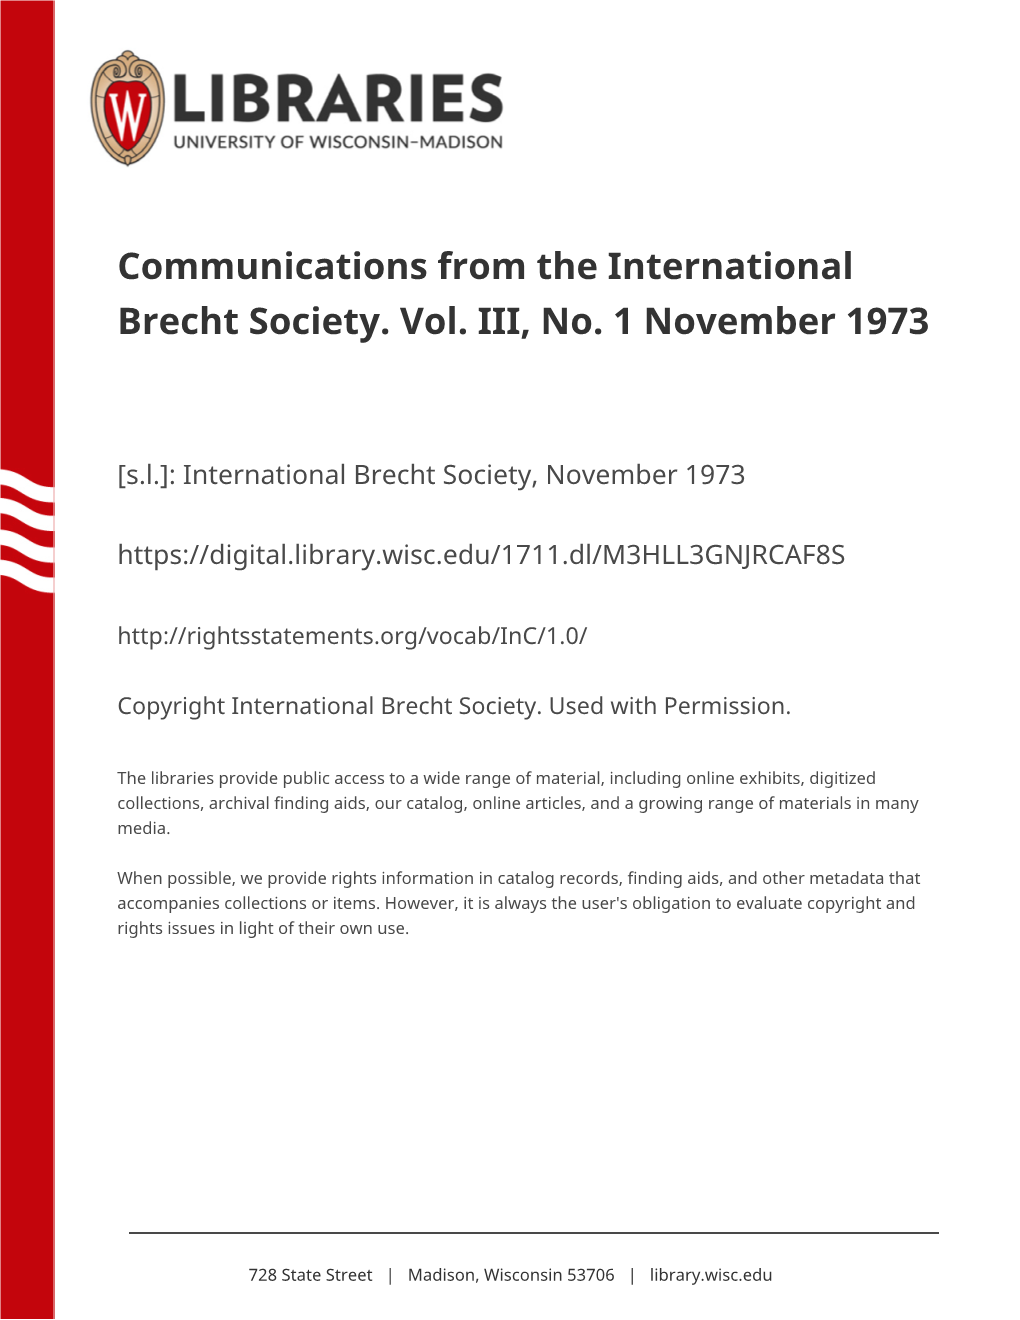 Communications from the International Brecht Society. Vol. III, No. 1 November 1973